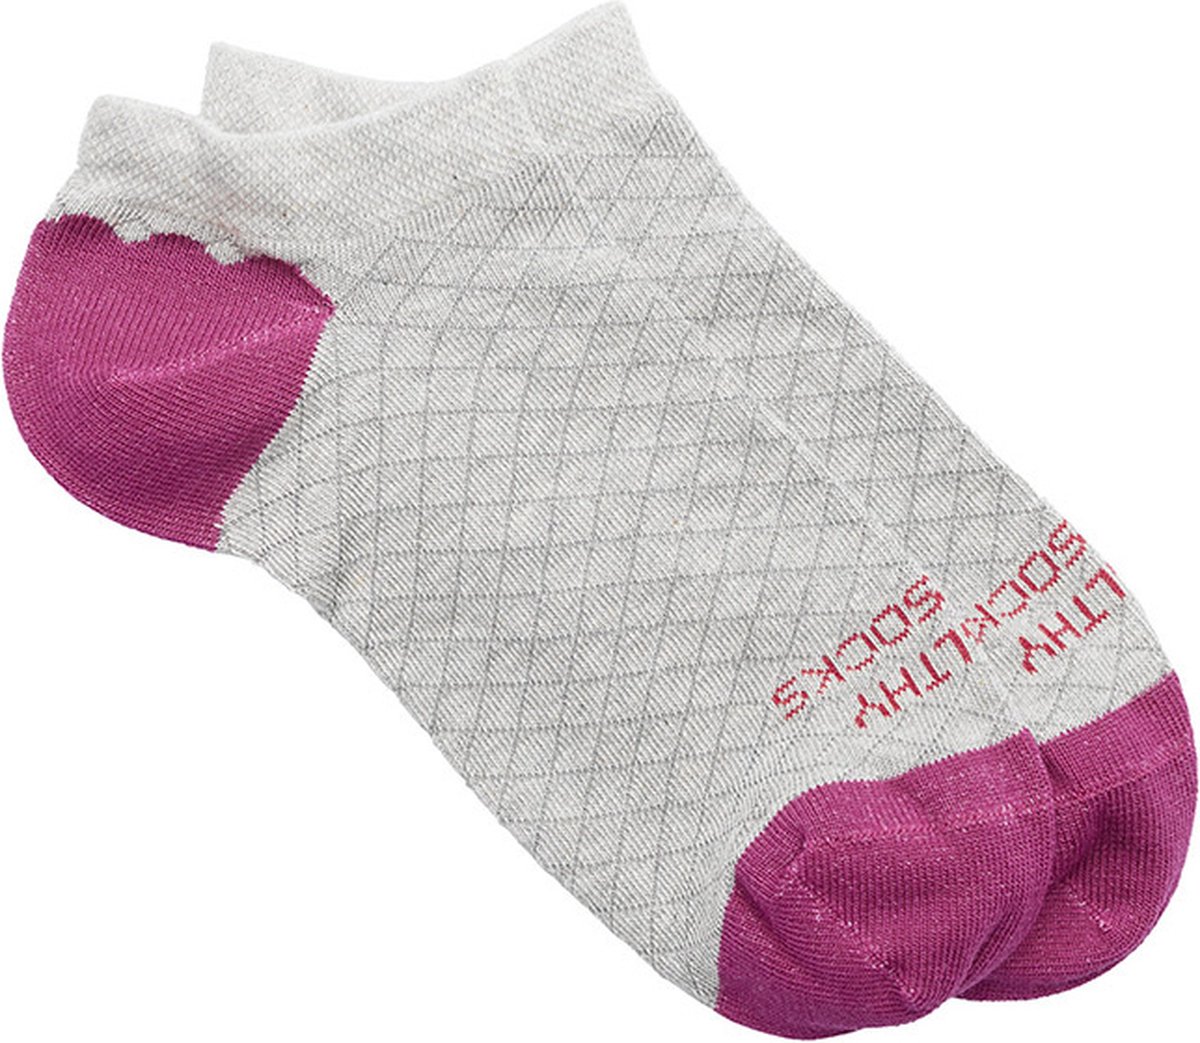 Healthy Seas Socks dames moray sneaker grijs - 36-40